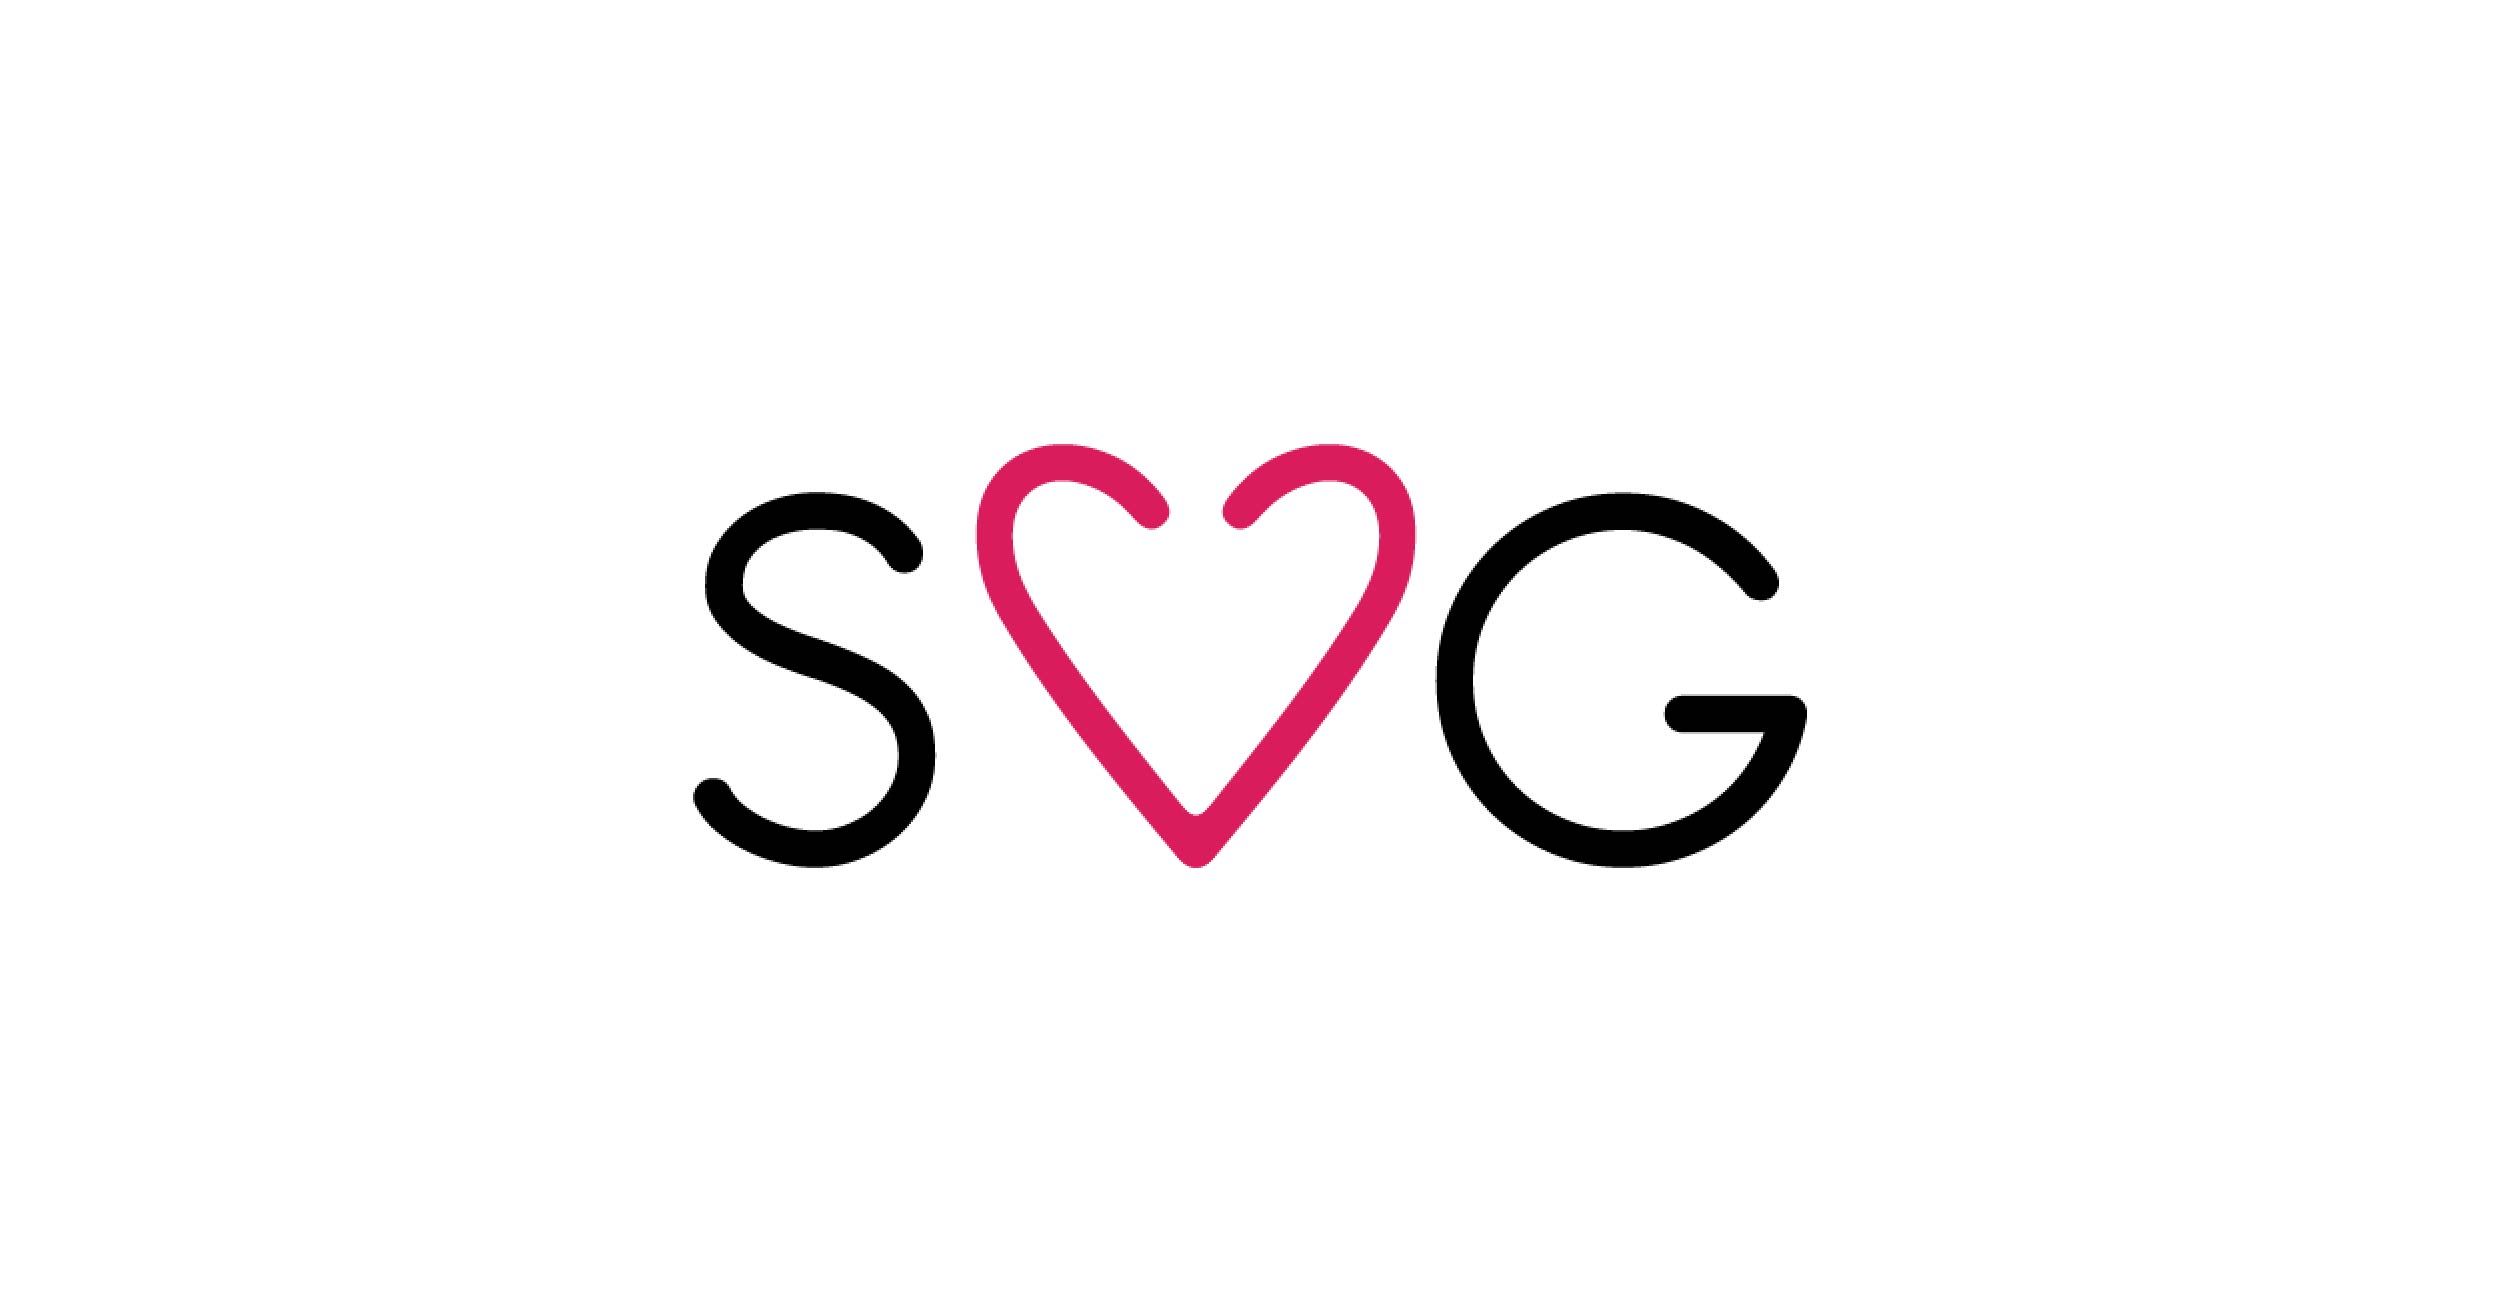 Download Free Lovesvg Com SVG DXF Cut File